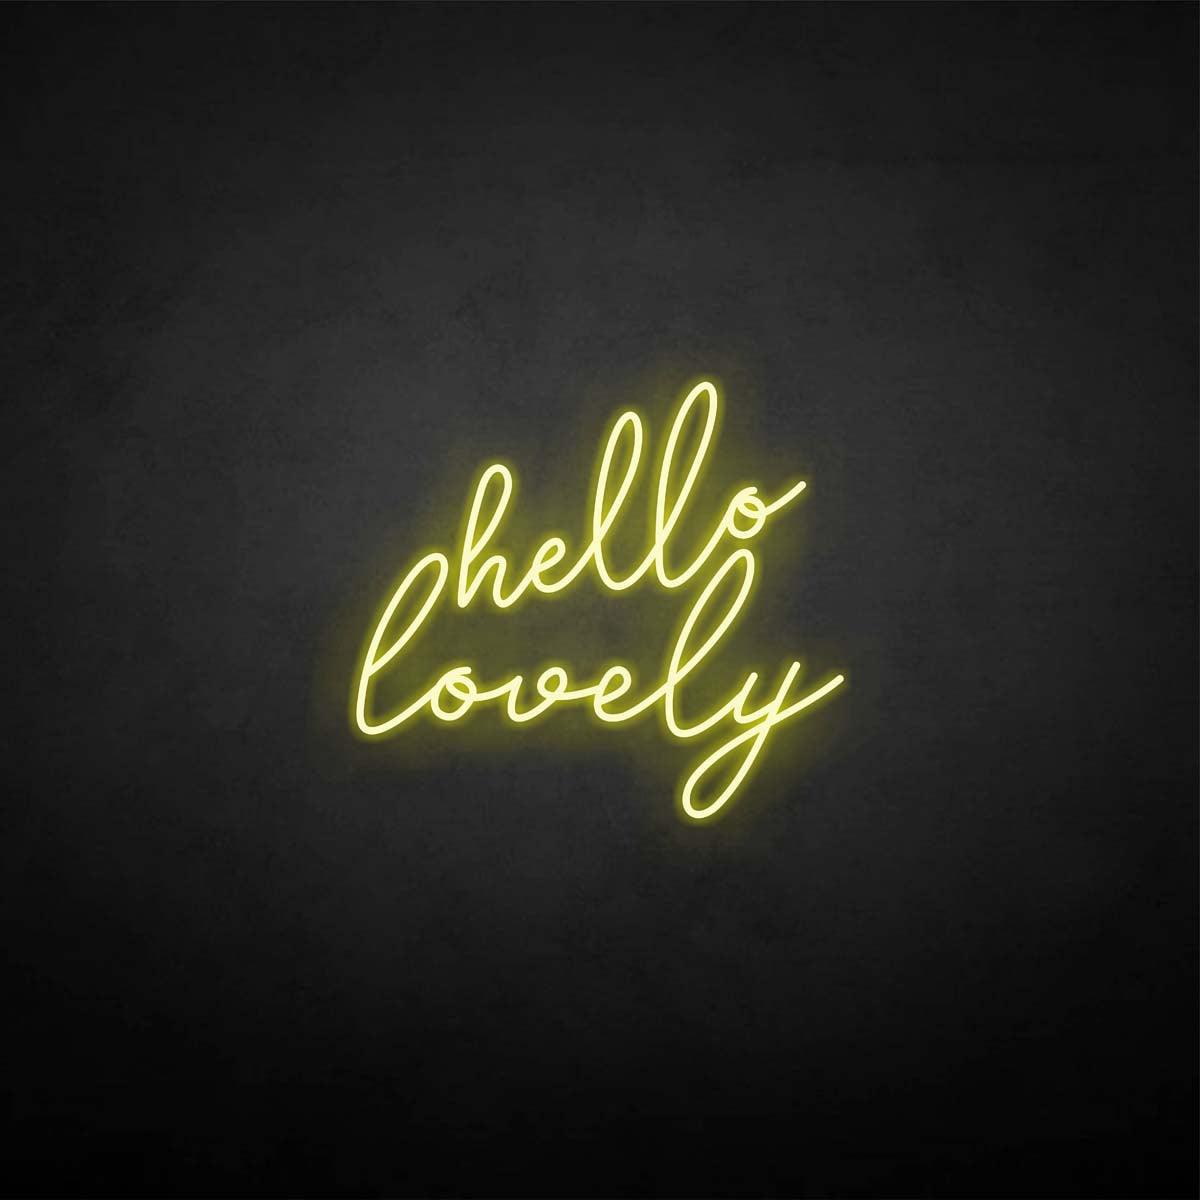 'hello lovely' neon sign